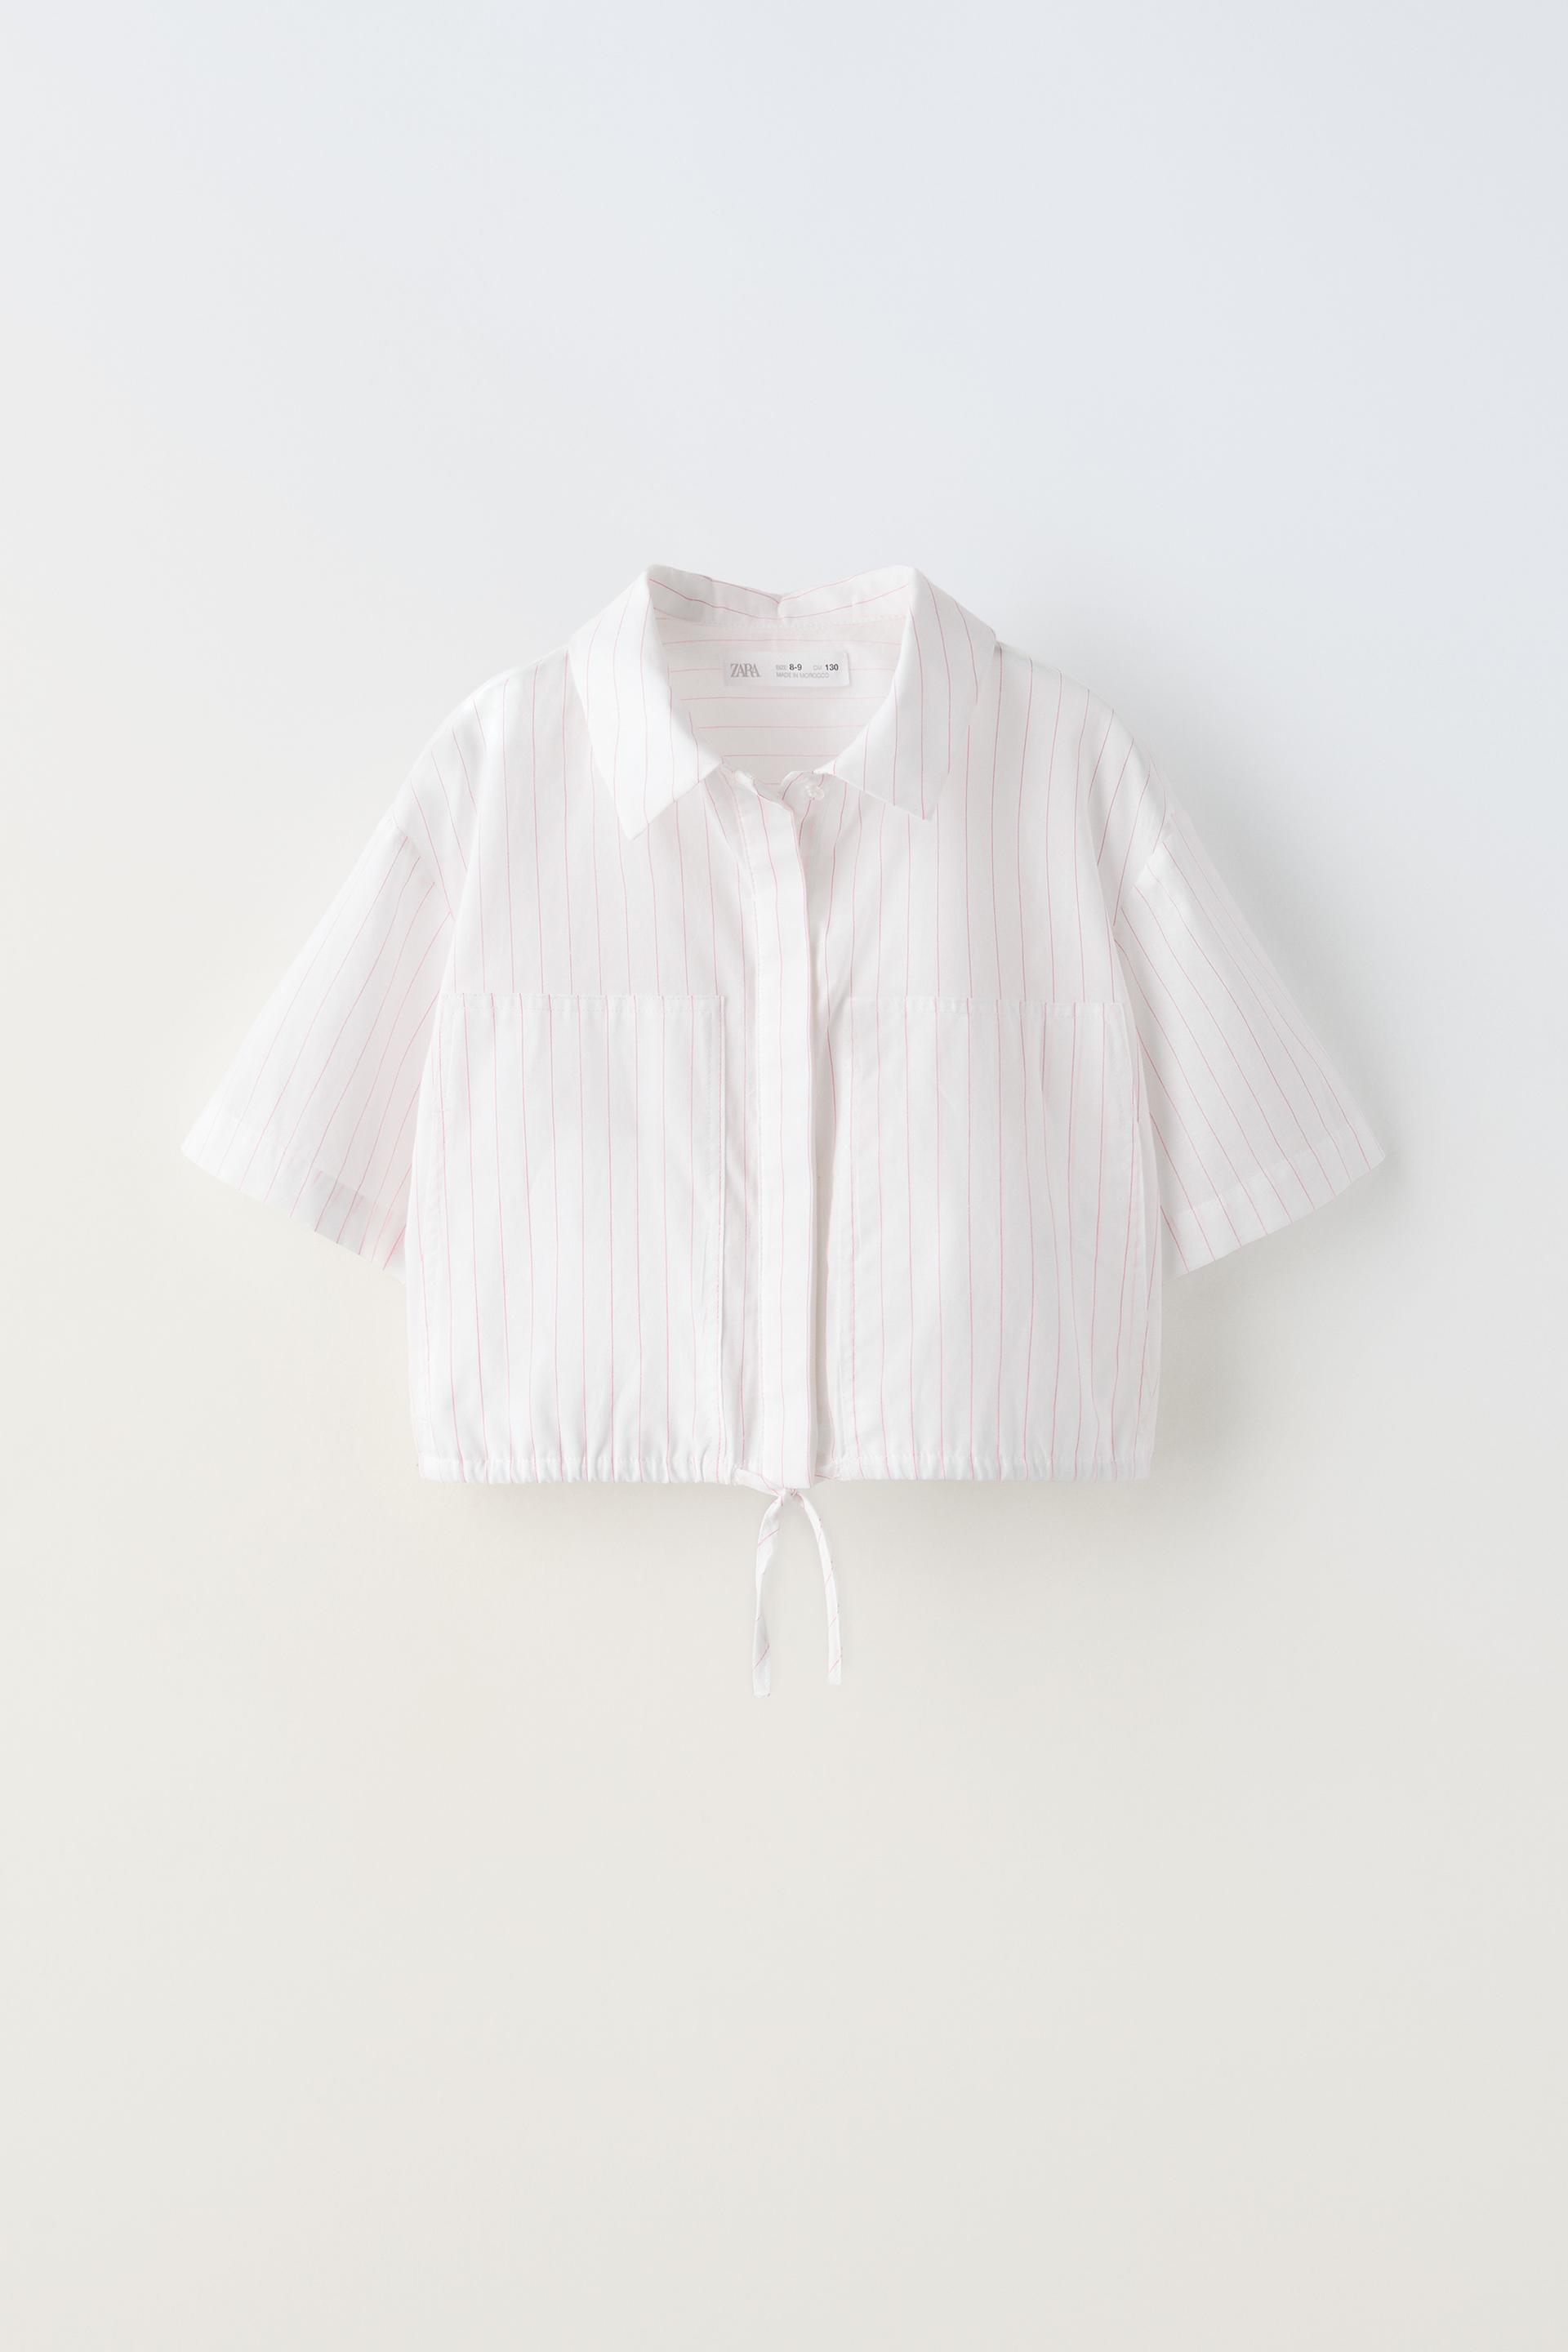 Рубашка Zara Striped Shirt, розовый-белый рубашка zara striped shirt голубой желтовато белый